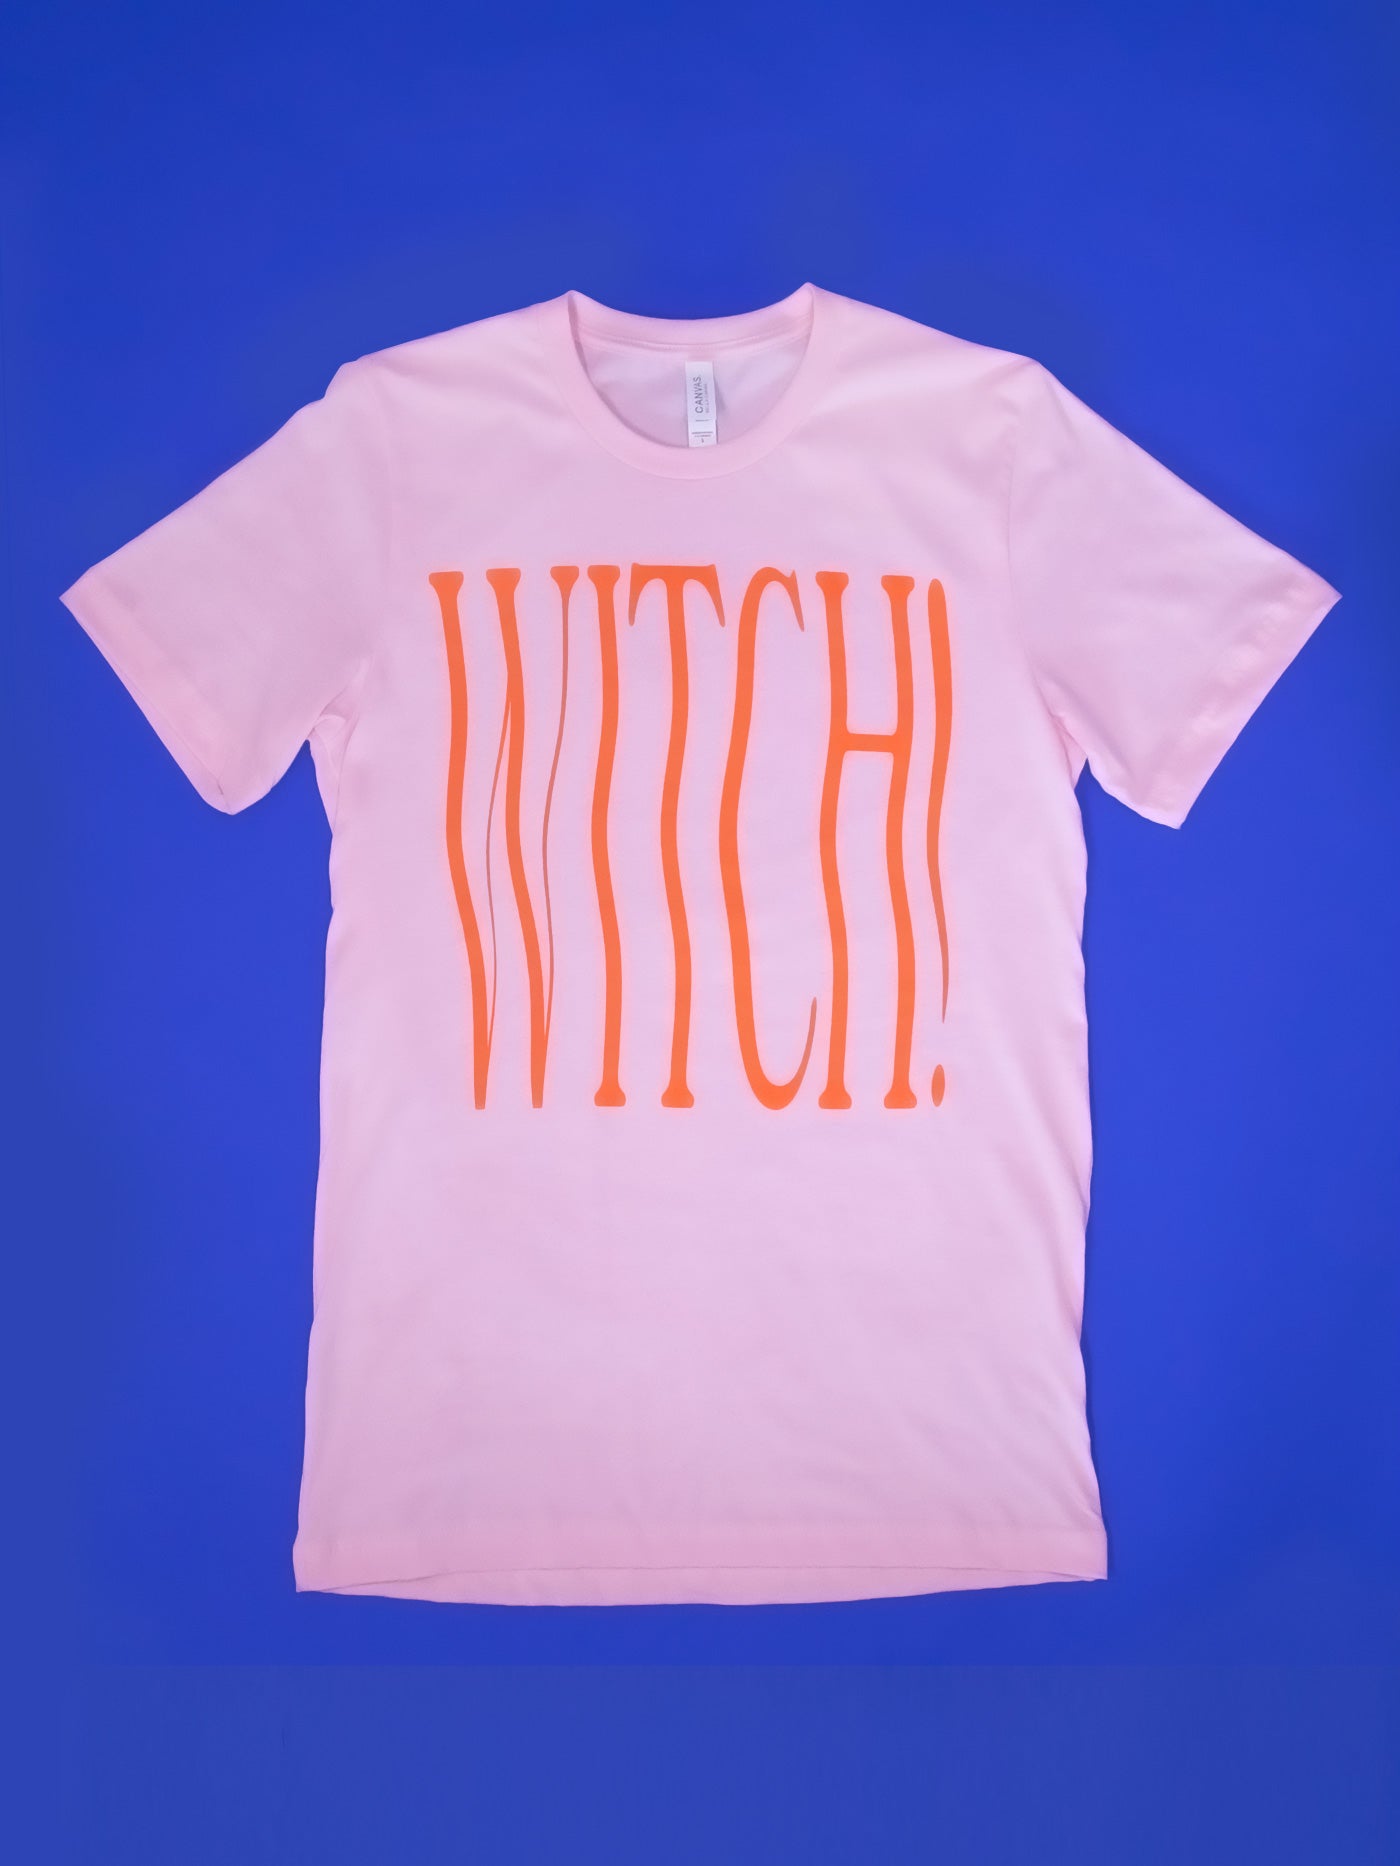 Witch! Tee: Pink + Orange